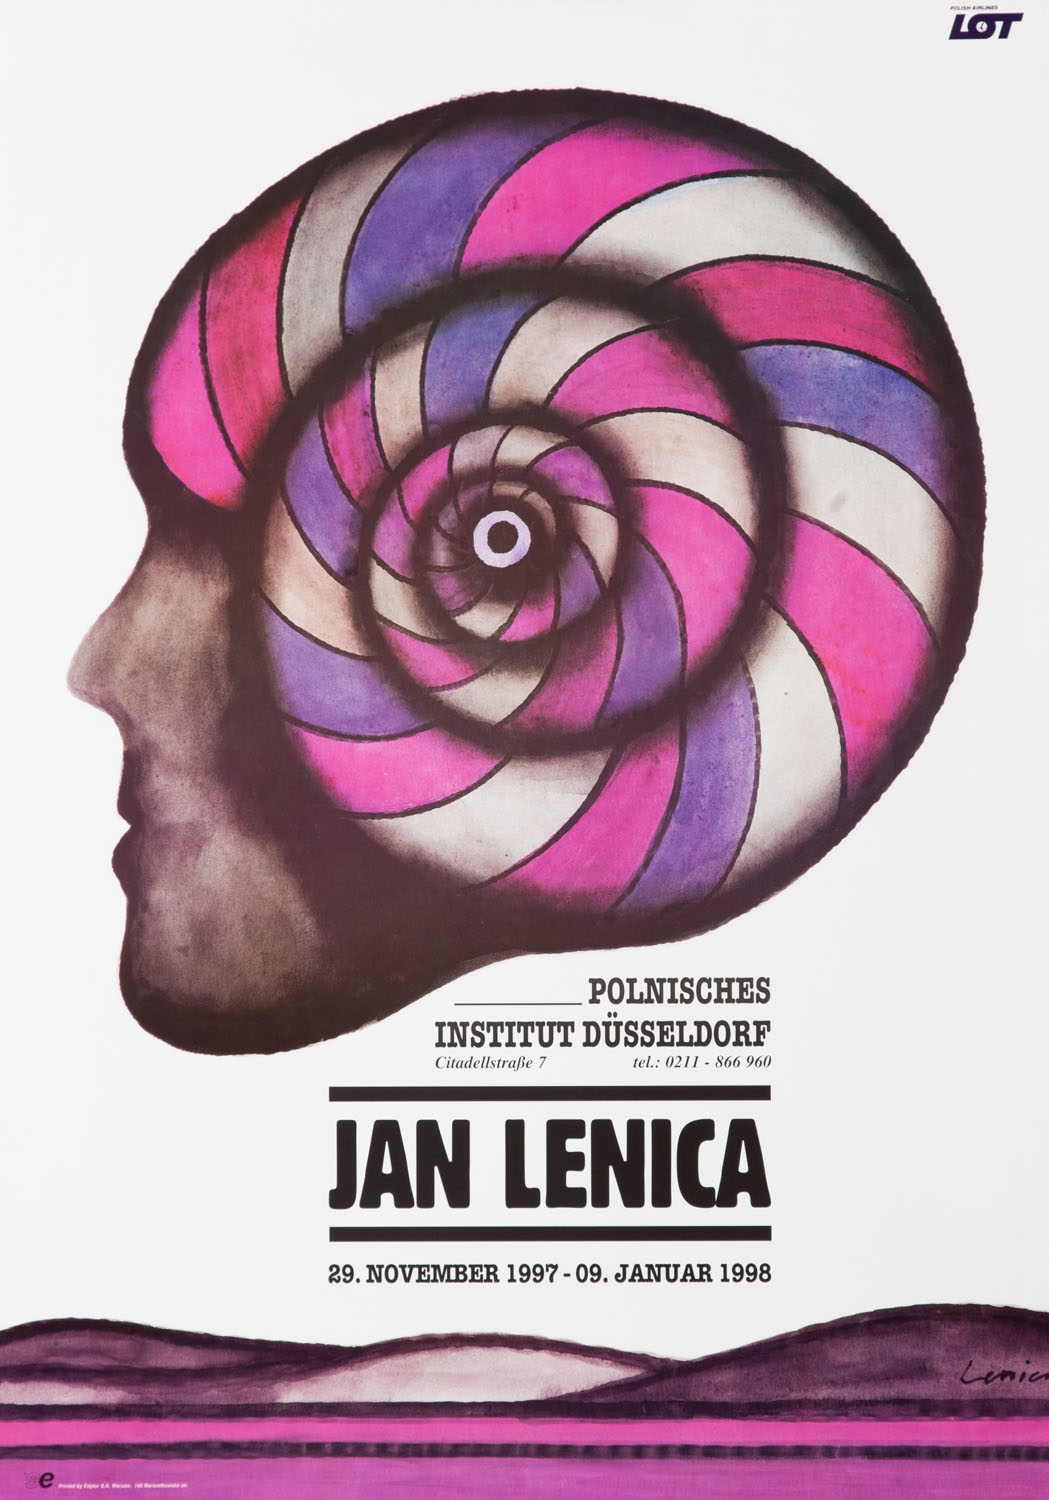 Plakat wystawy "Jan Lenica" w Polnisches Institut Düsseldorf by Jan Lenica, 1997